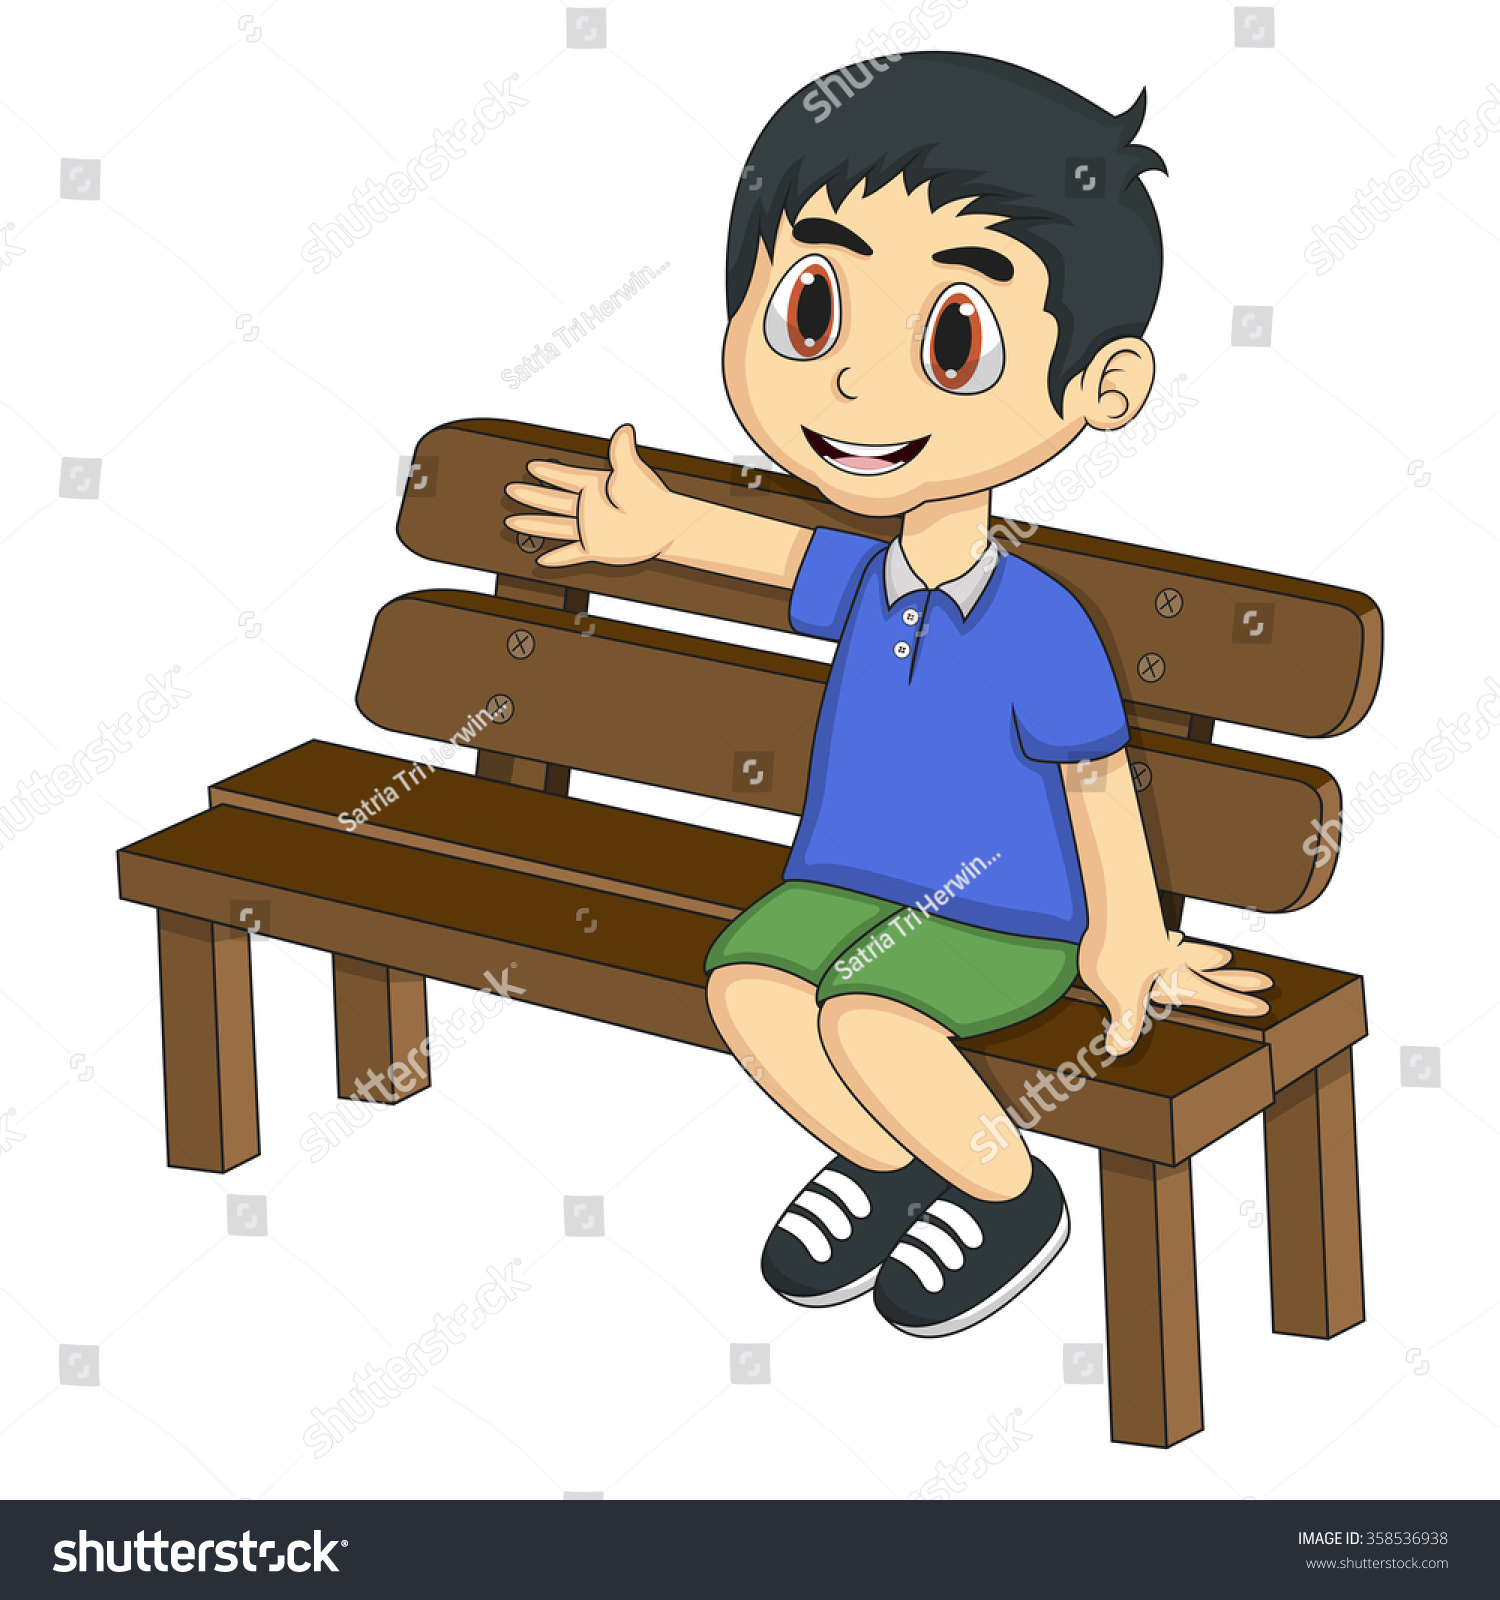 дети сидят на скамейке